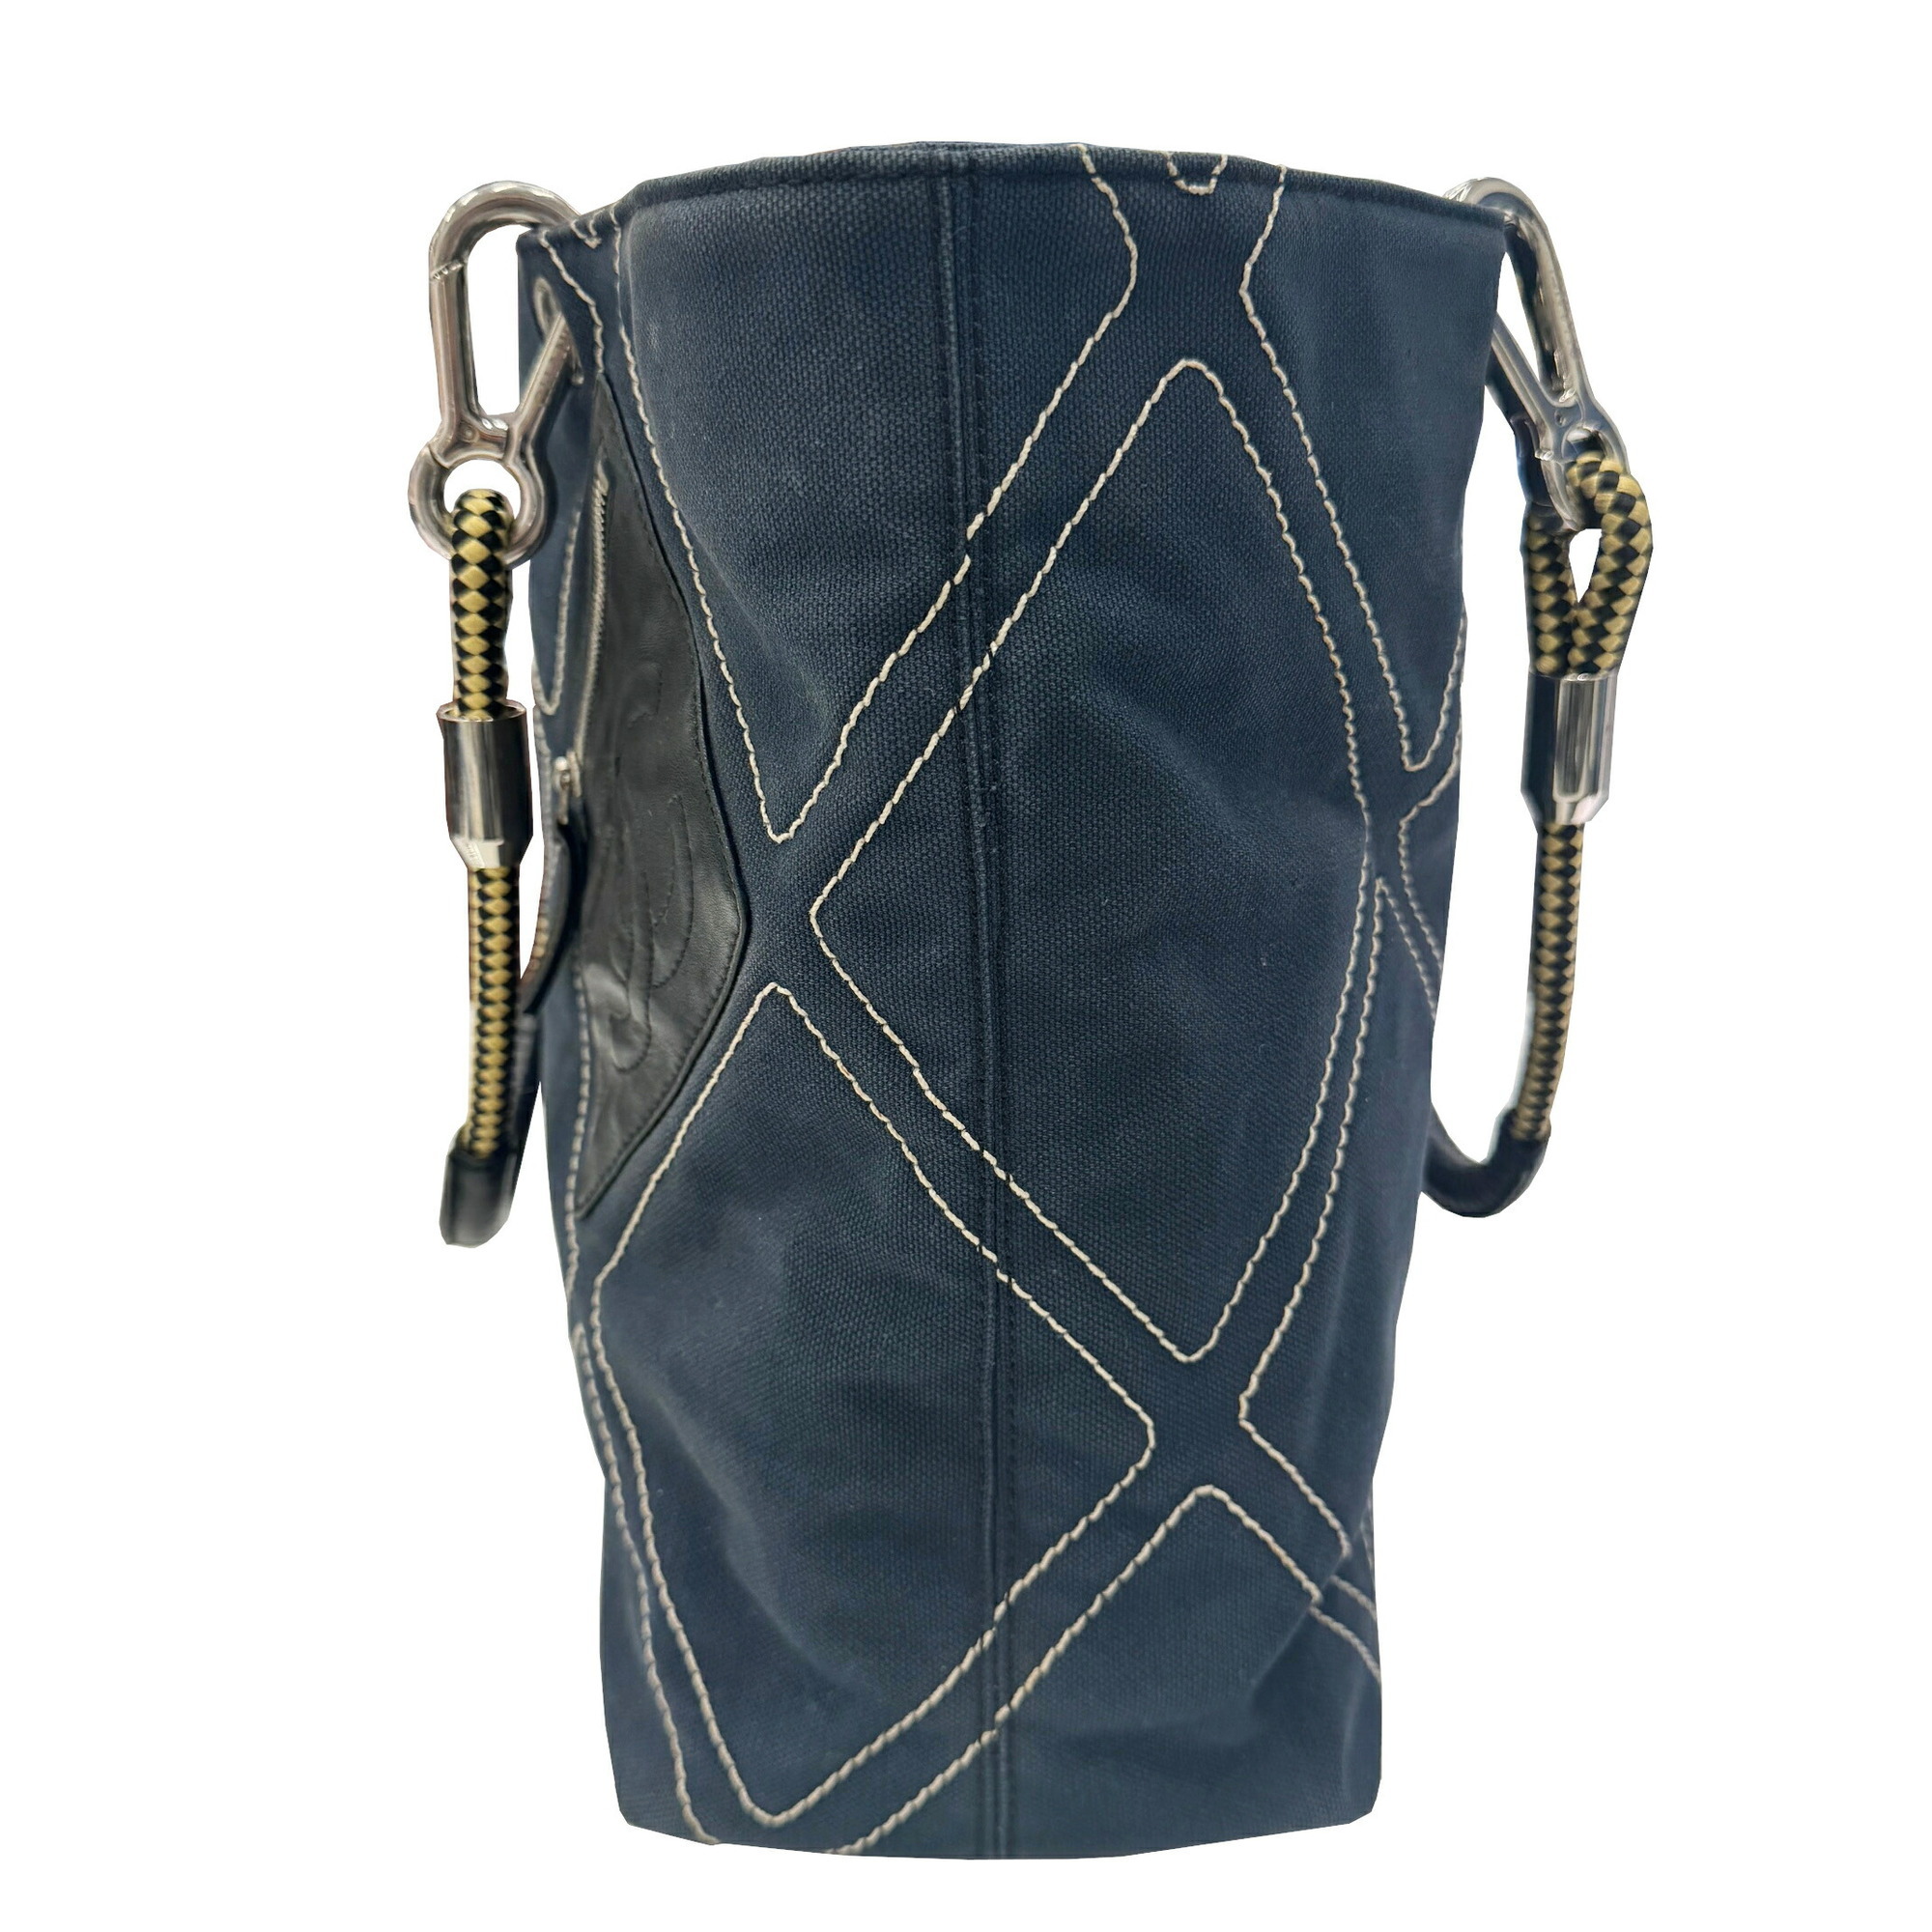 CHANEL Chanel No.5 Number 5 Coco Mark Tote Bag Handbag Canvas Leather Navy Black A27208 9th Series Ladies